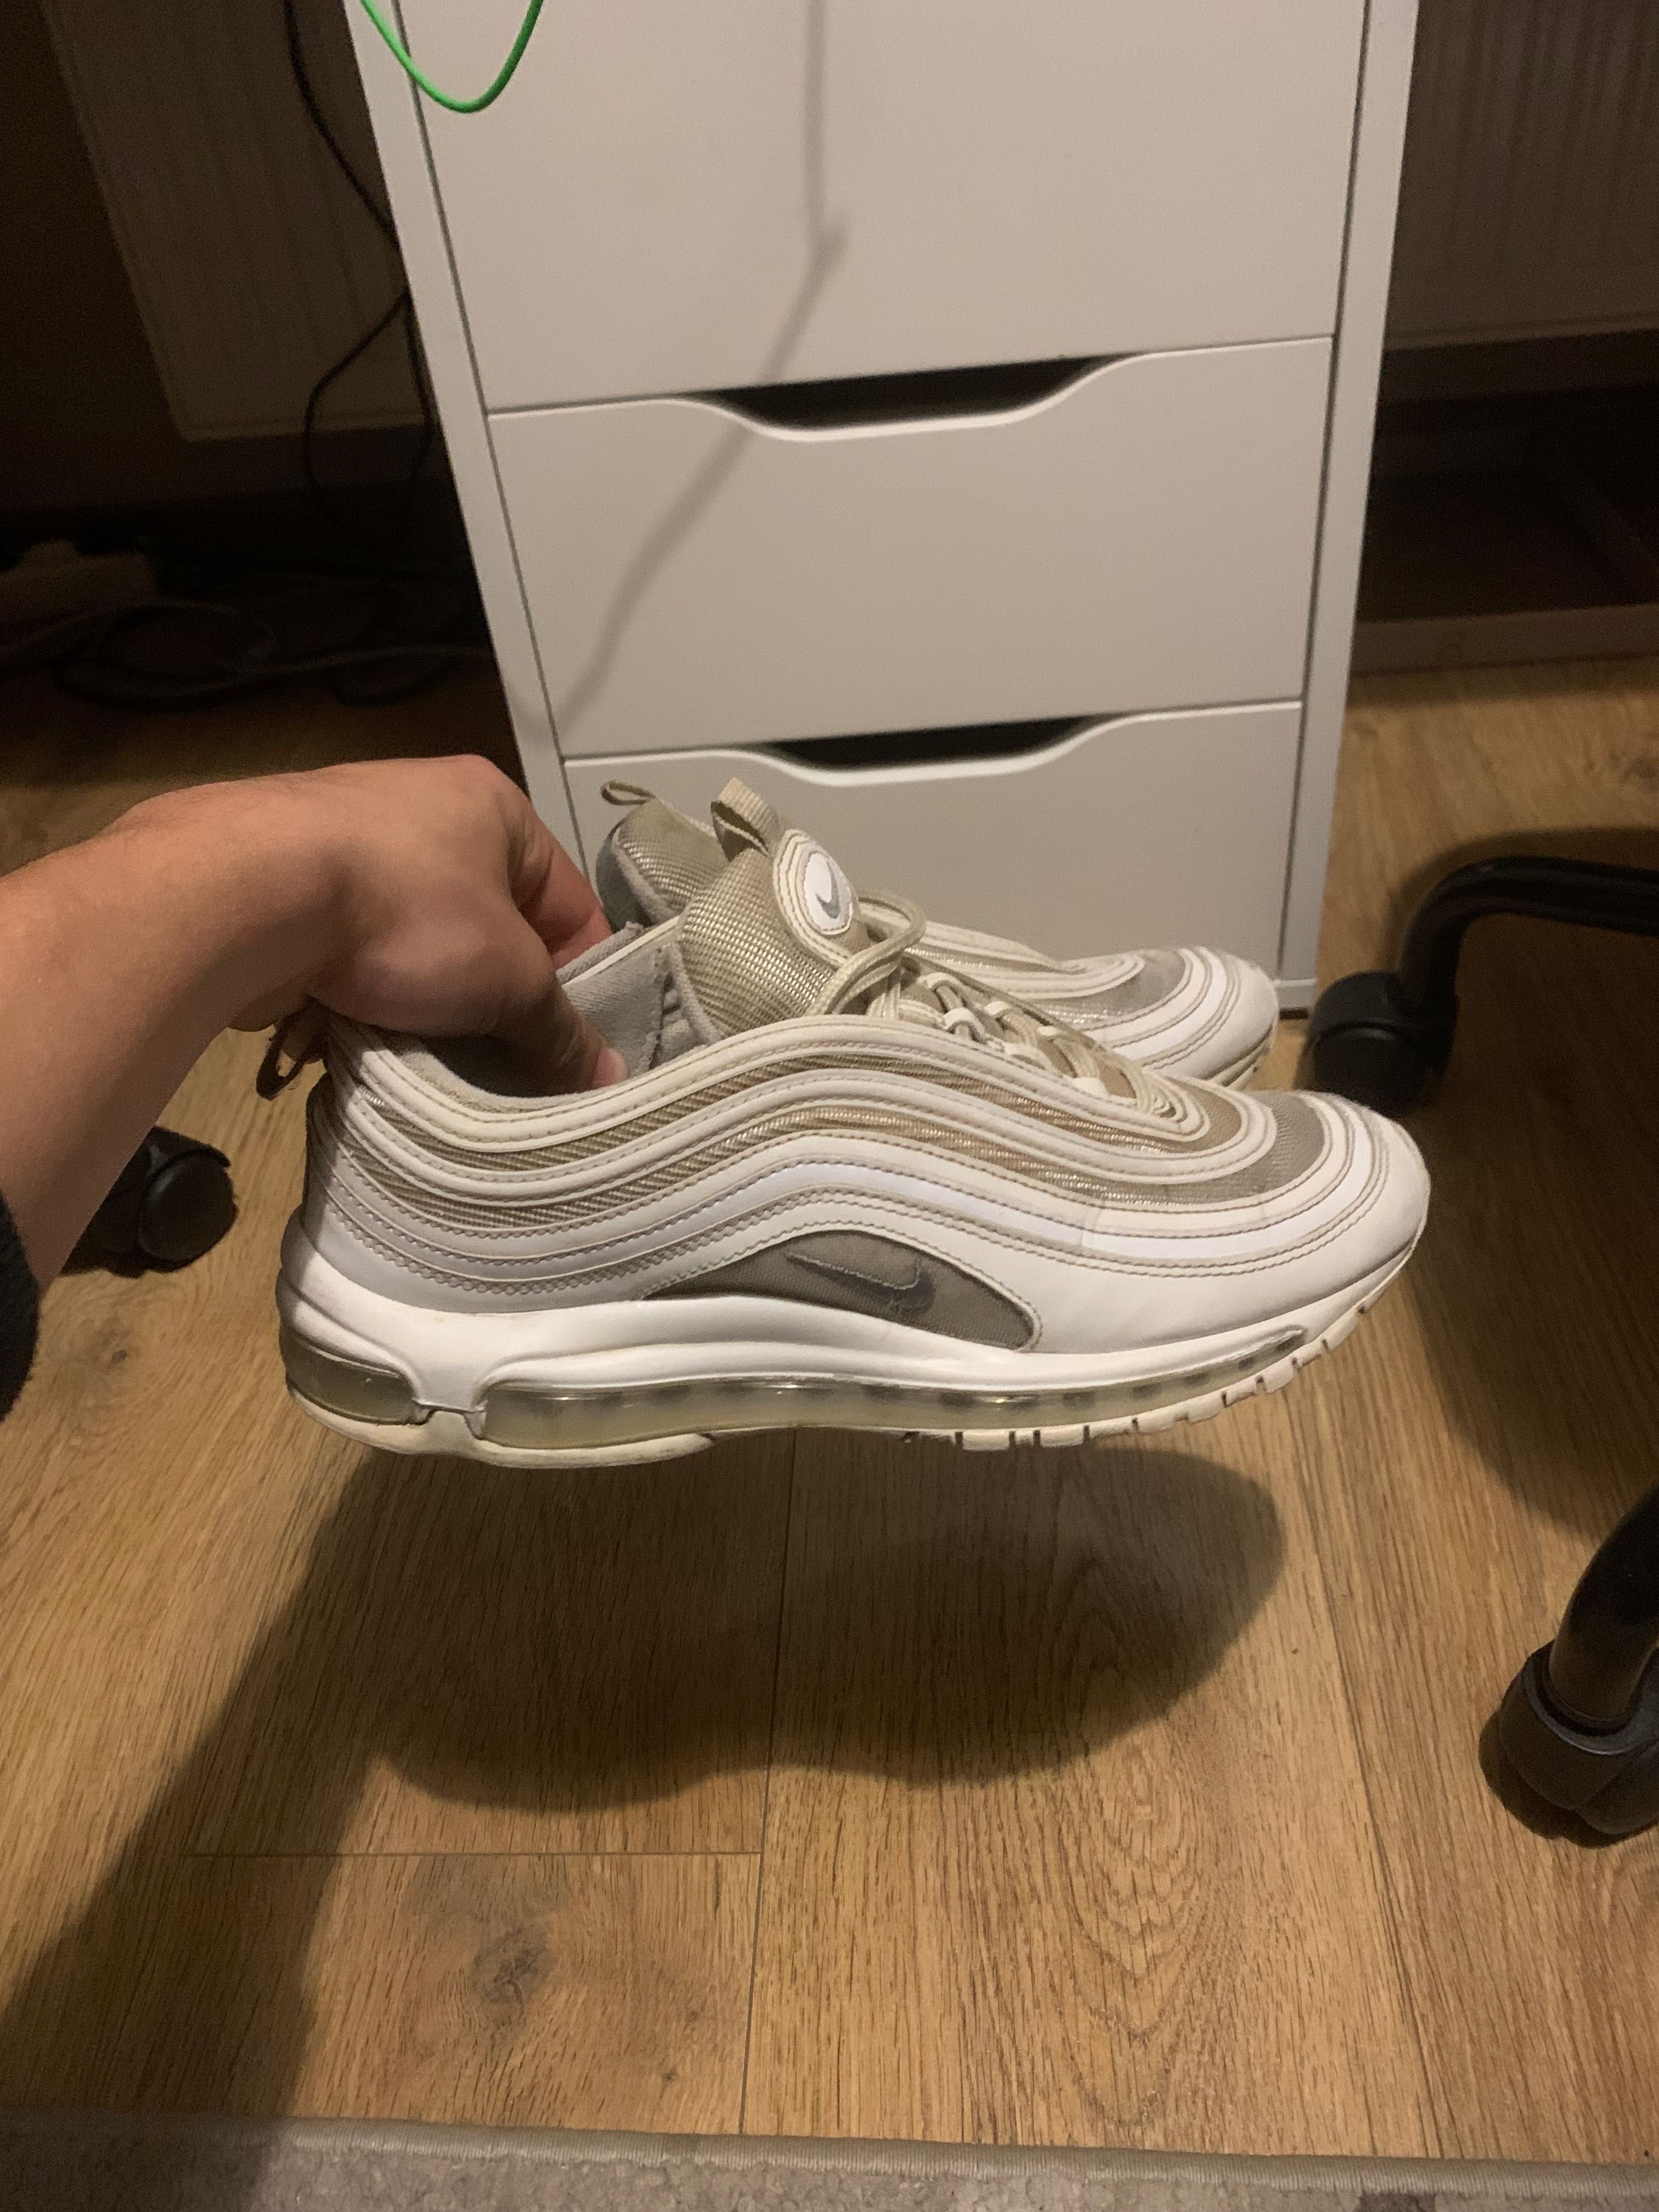 Buty Nike 97 białe